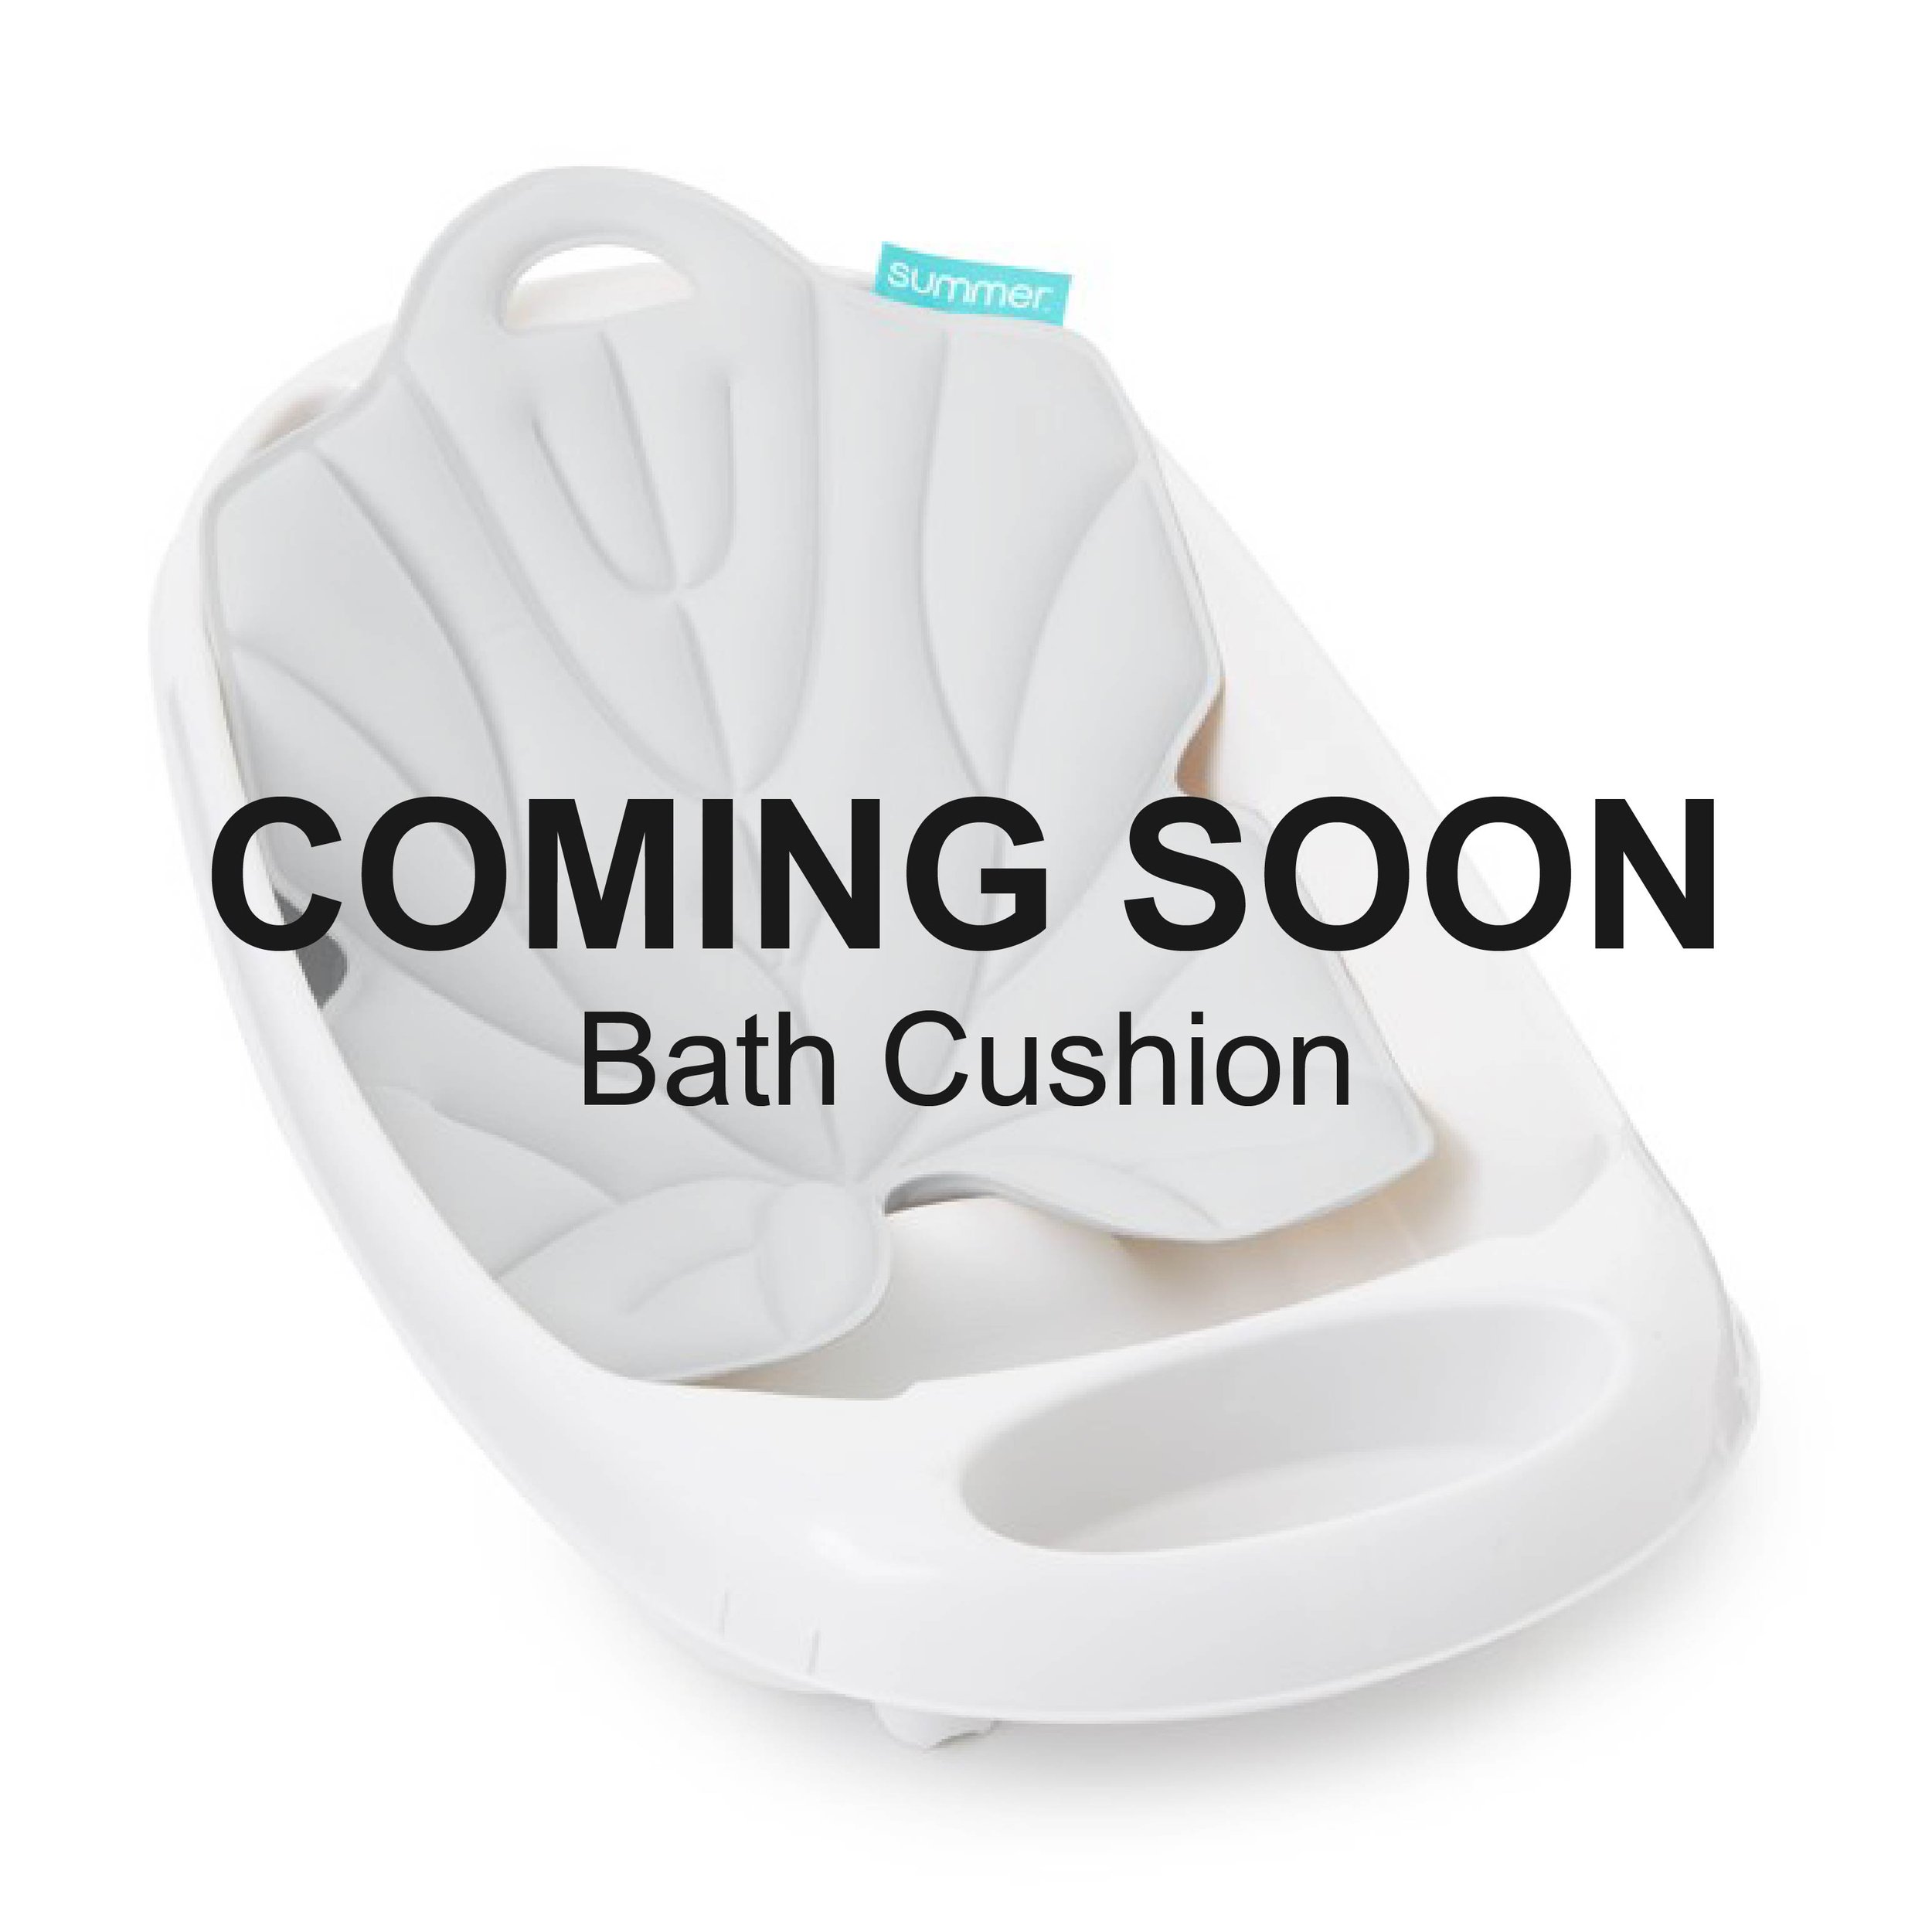 Website_Coming-Soon_Bath Cushion.jpg